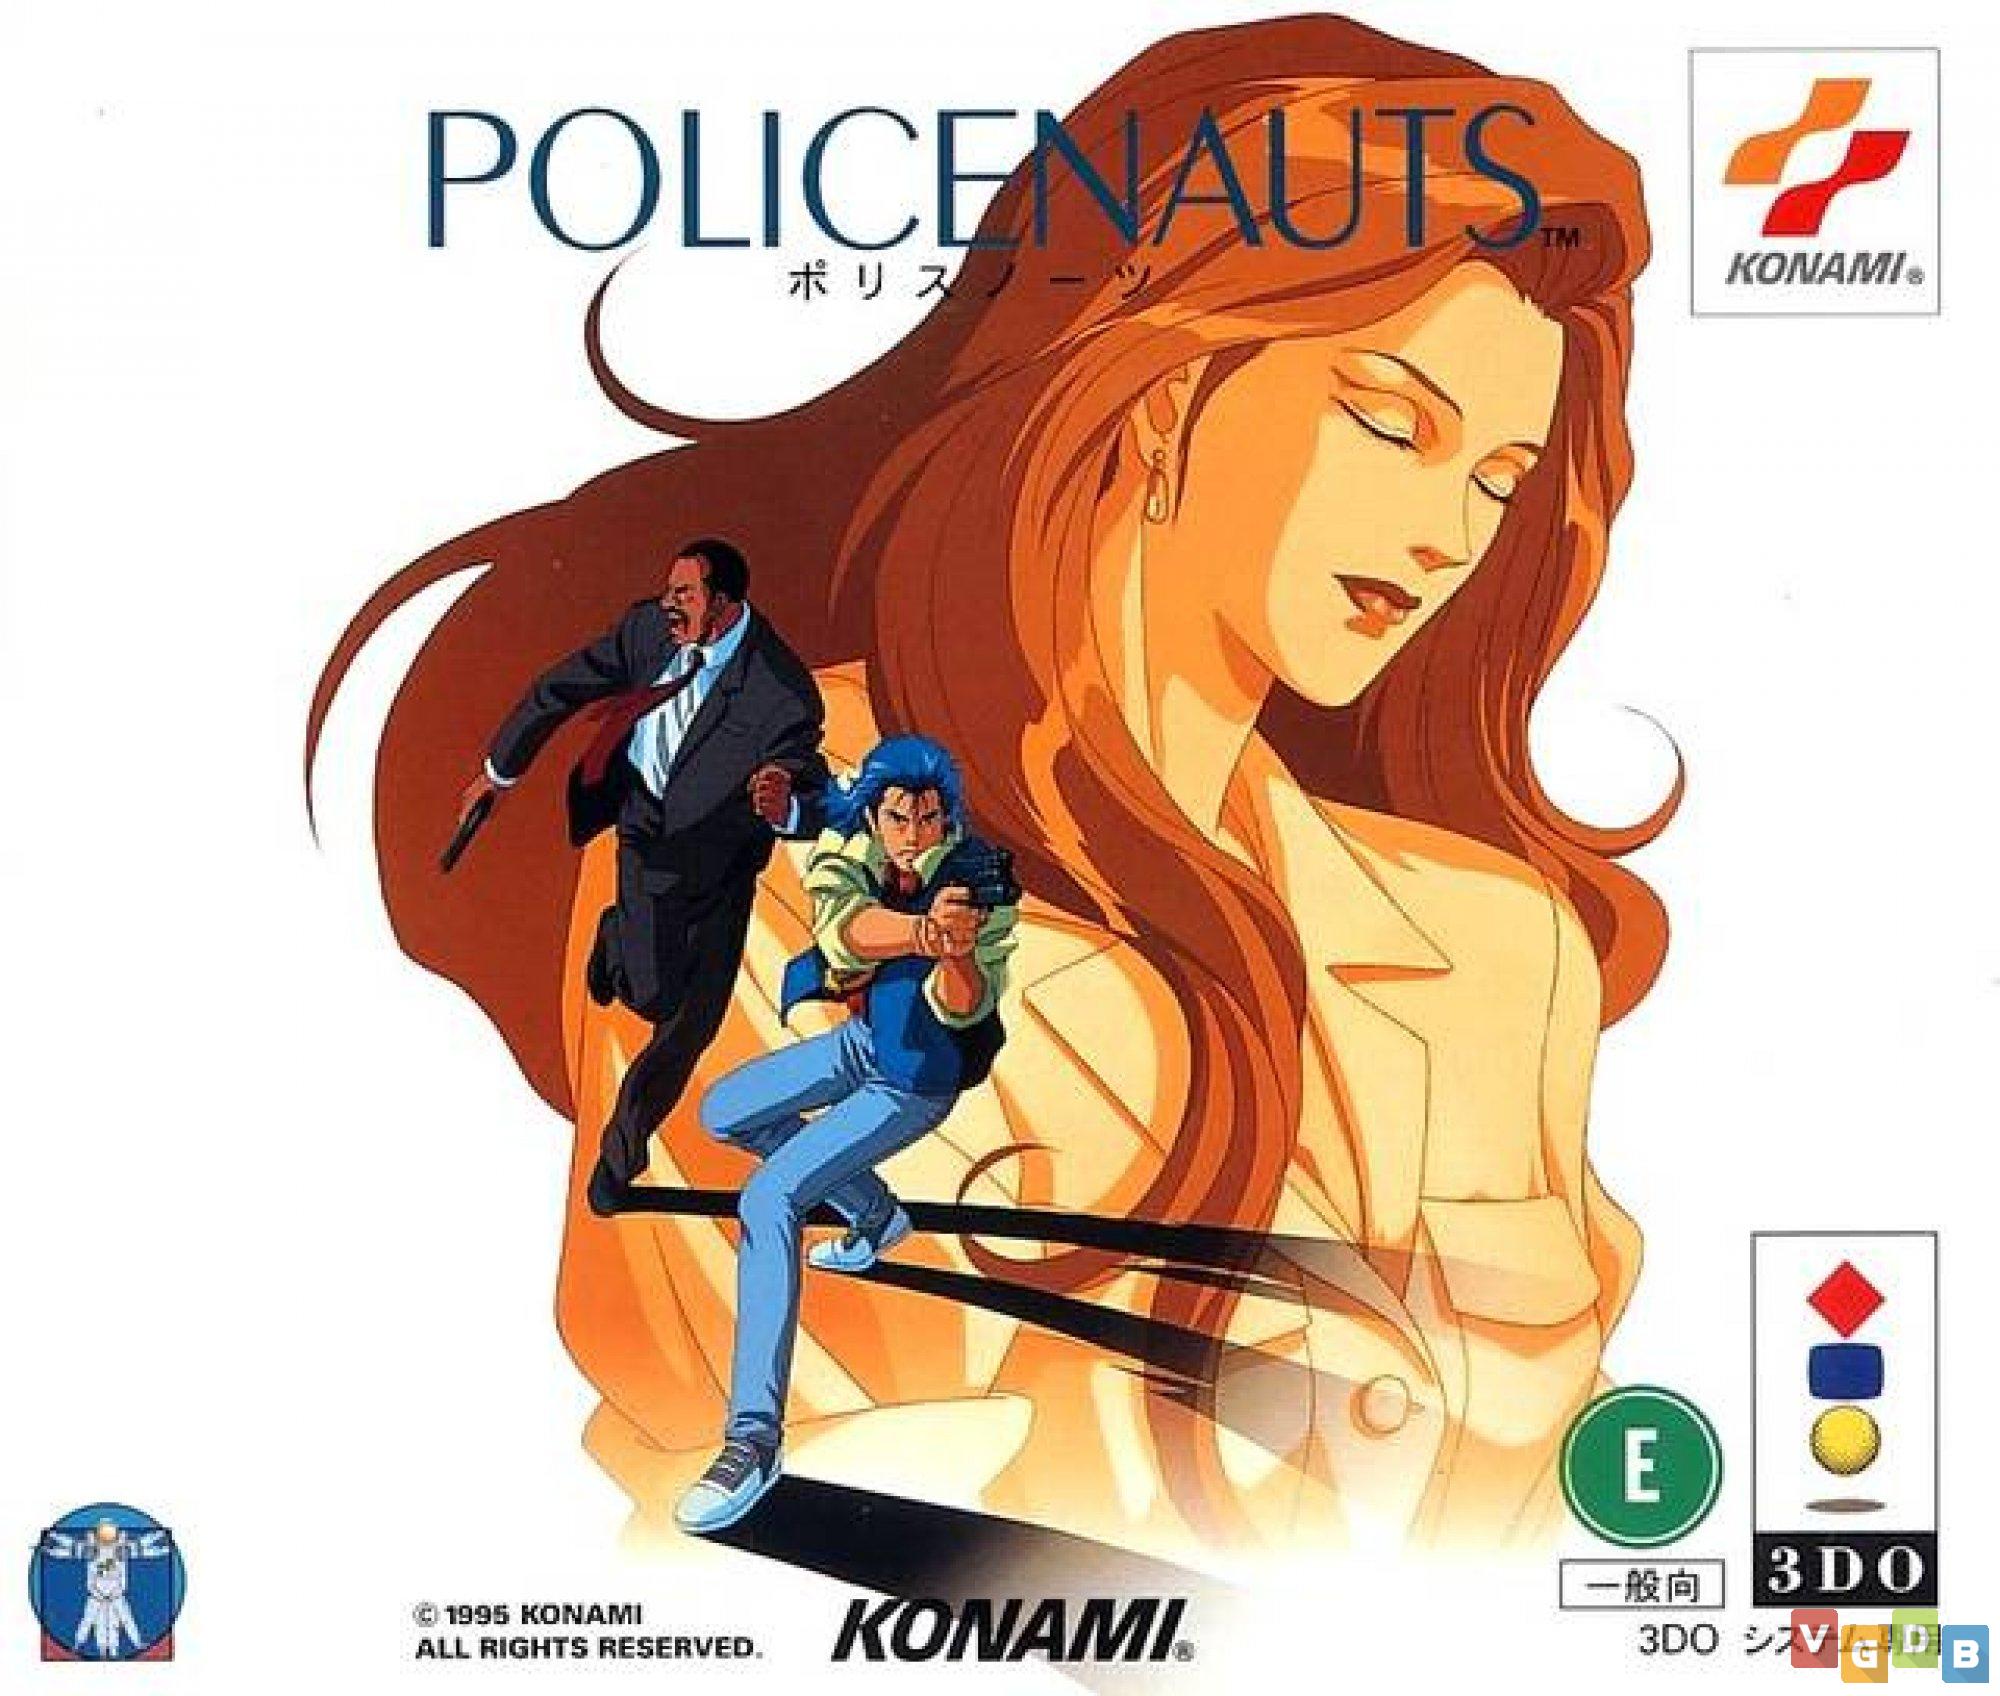 Policenauts. Policenauts Jonathan. Джонатан Ингрэм Policenauts. Policenauts ps1 обложка. Policenauts игра.